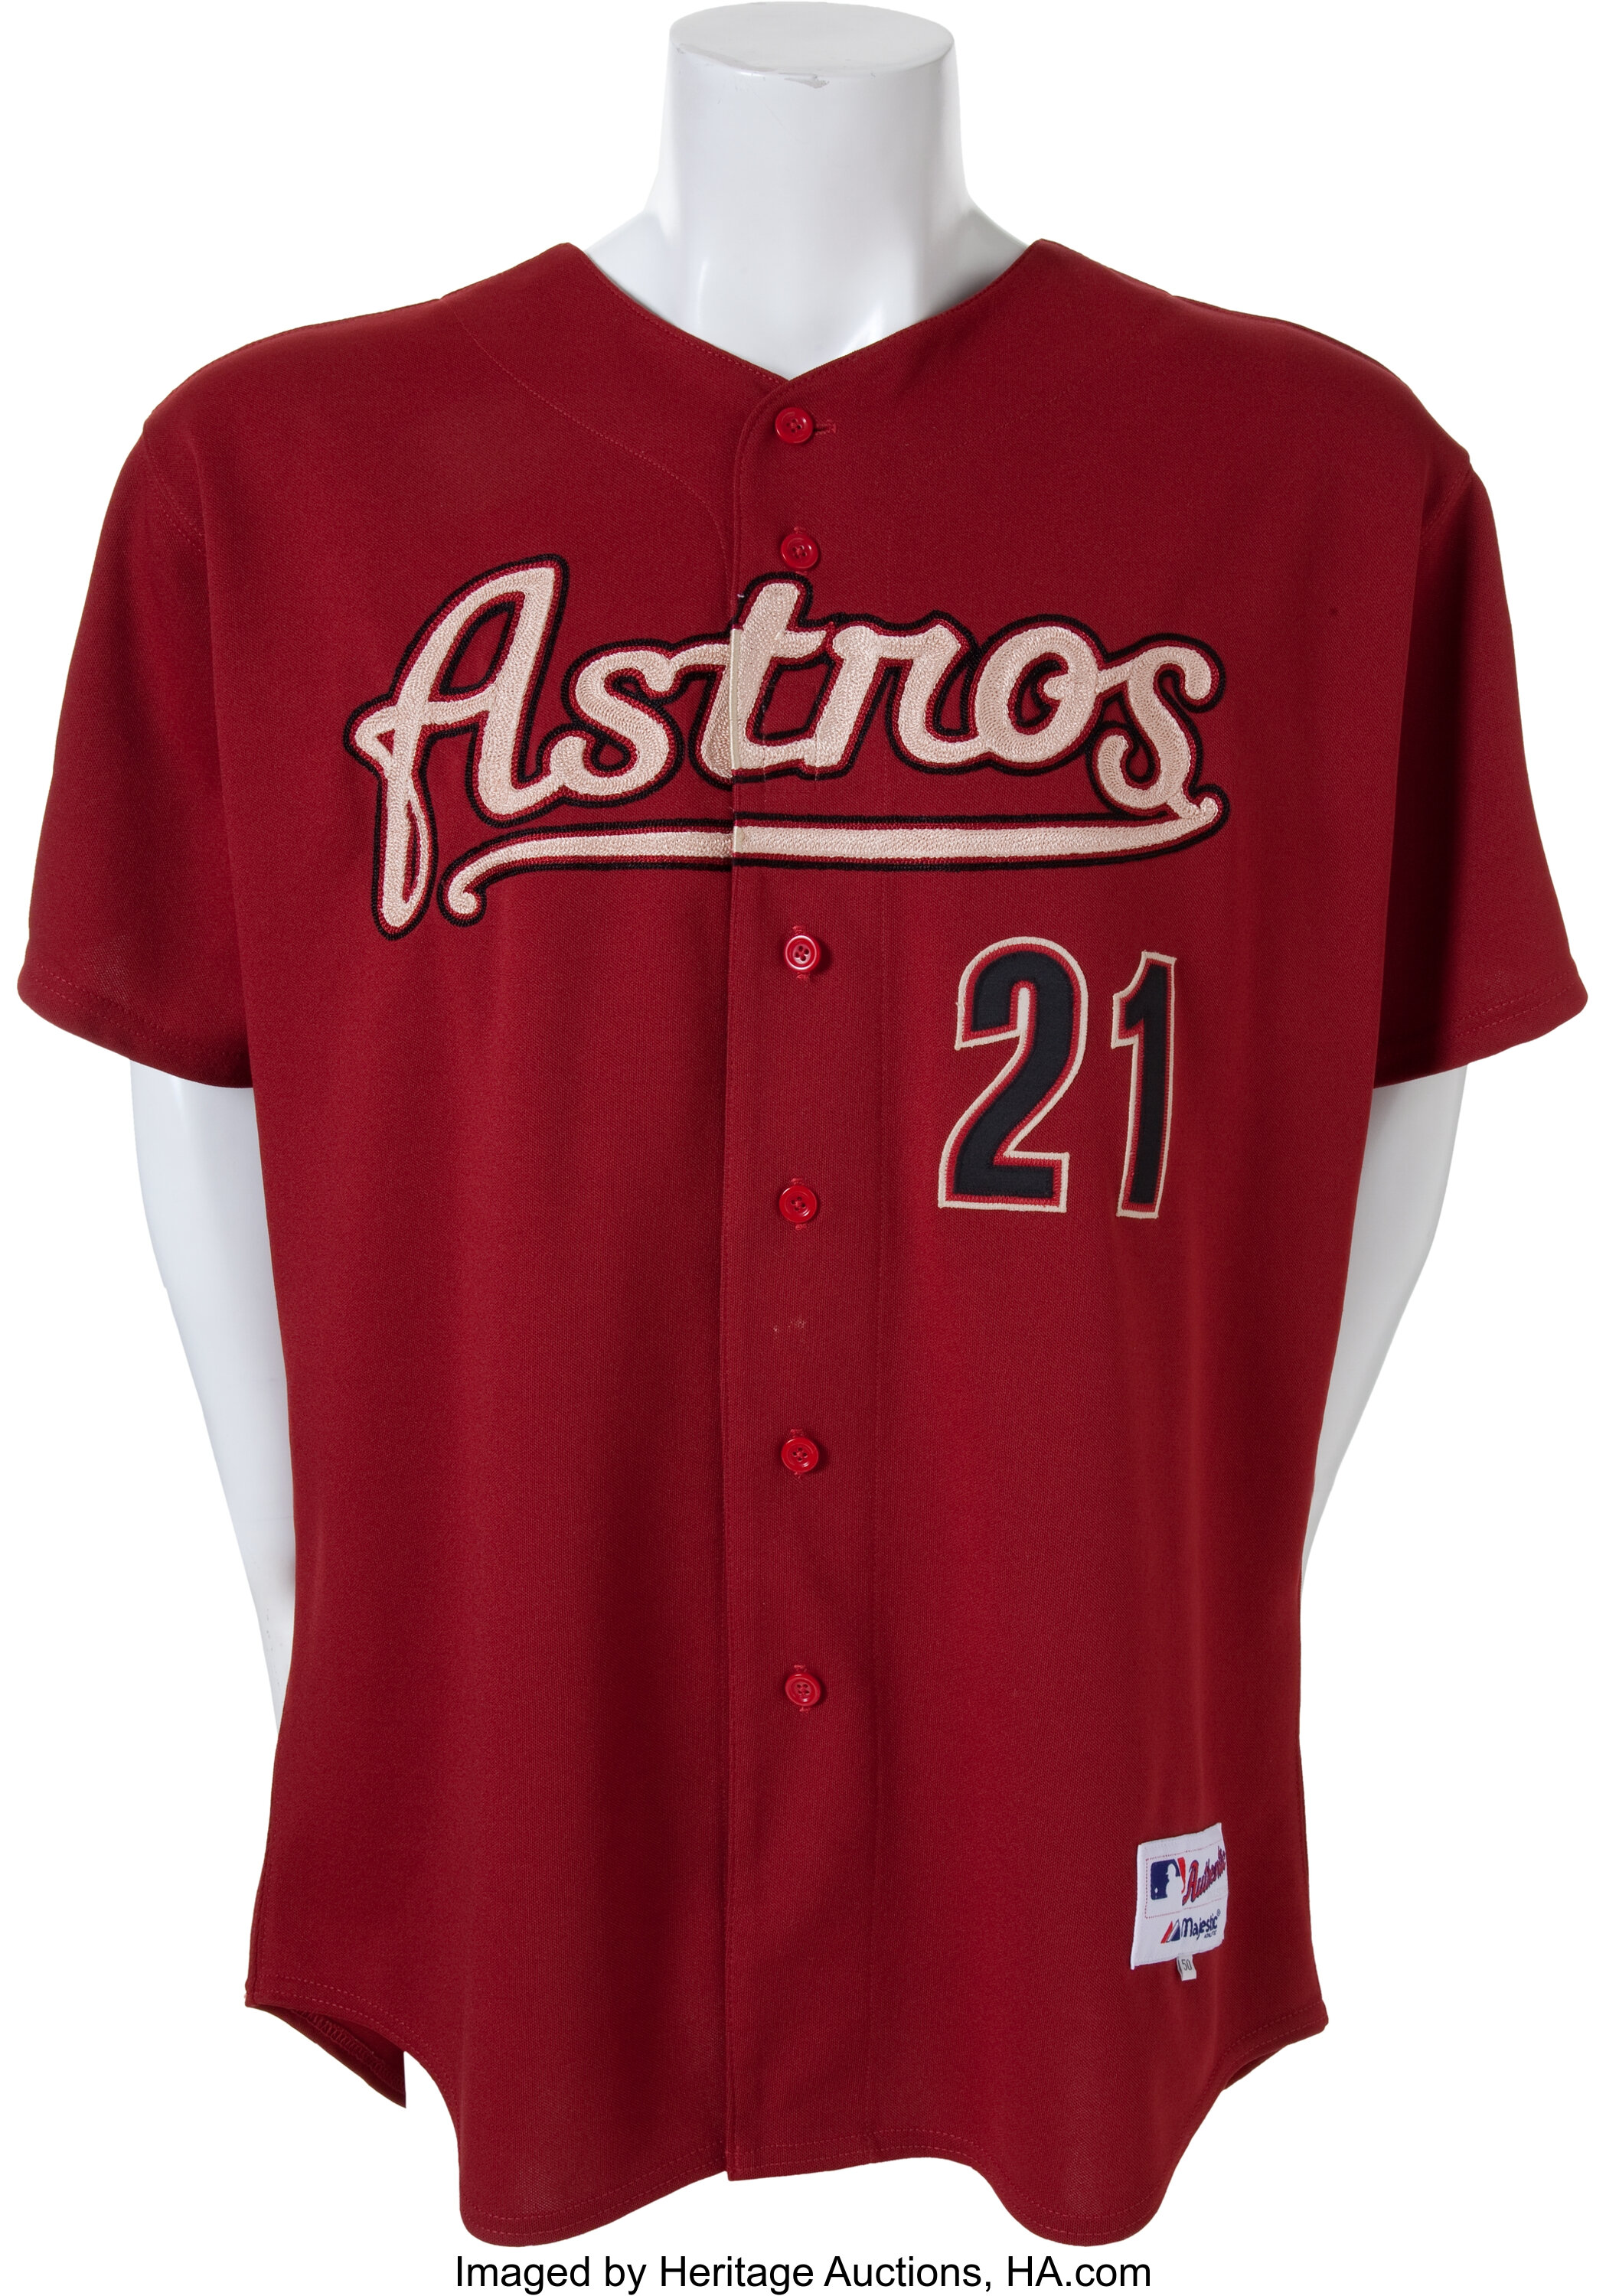 2006 Andy Pettitte Game Worn Houston Astros Jersey. Baseball